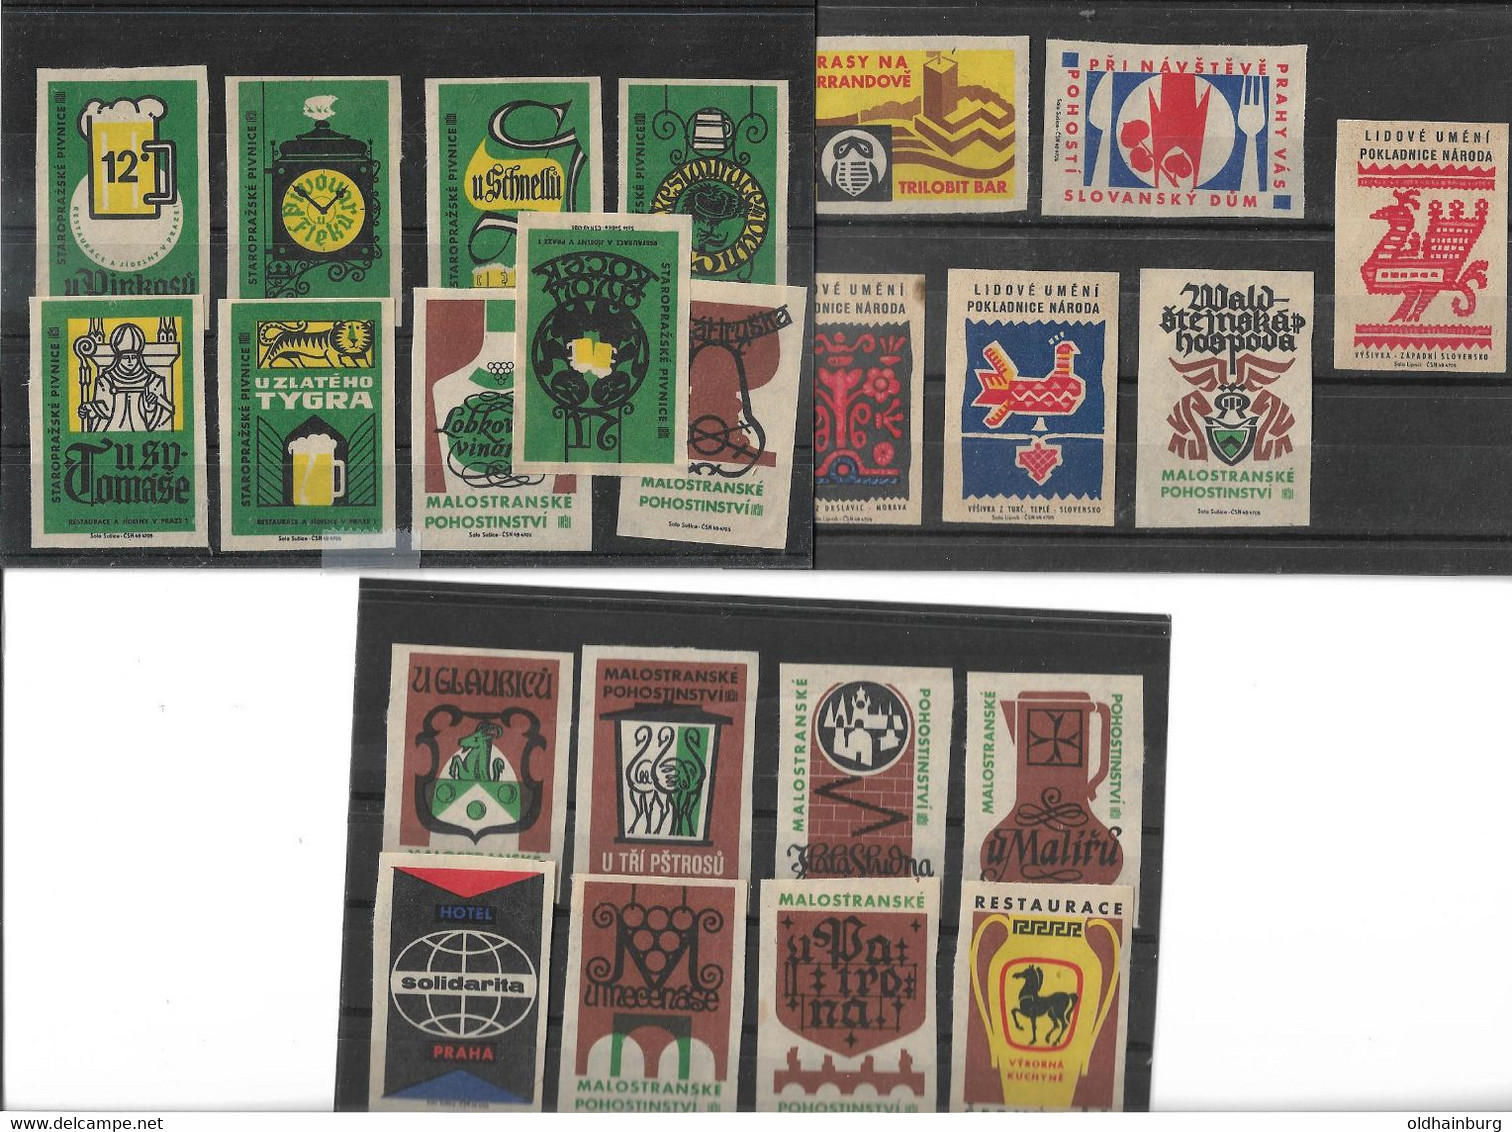 4188r: CSSR Um 1965, Vignettenserie "3 Steckkarten Lt. Scan" - Collections, Lots & Séries